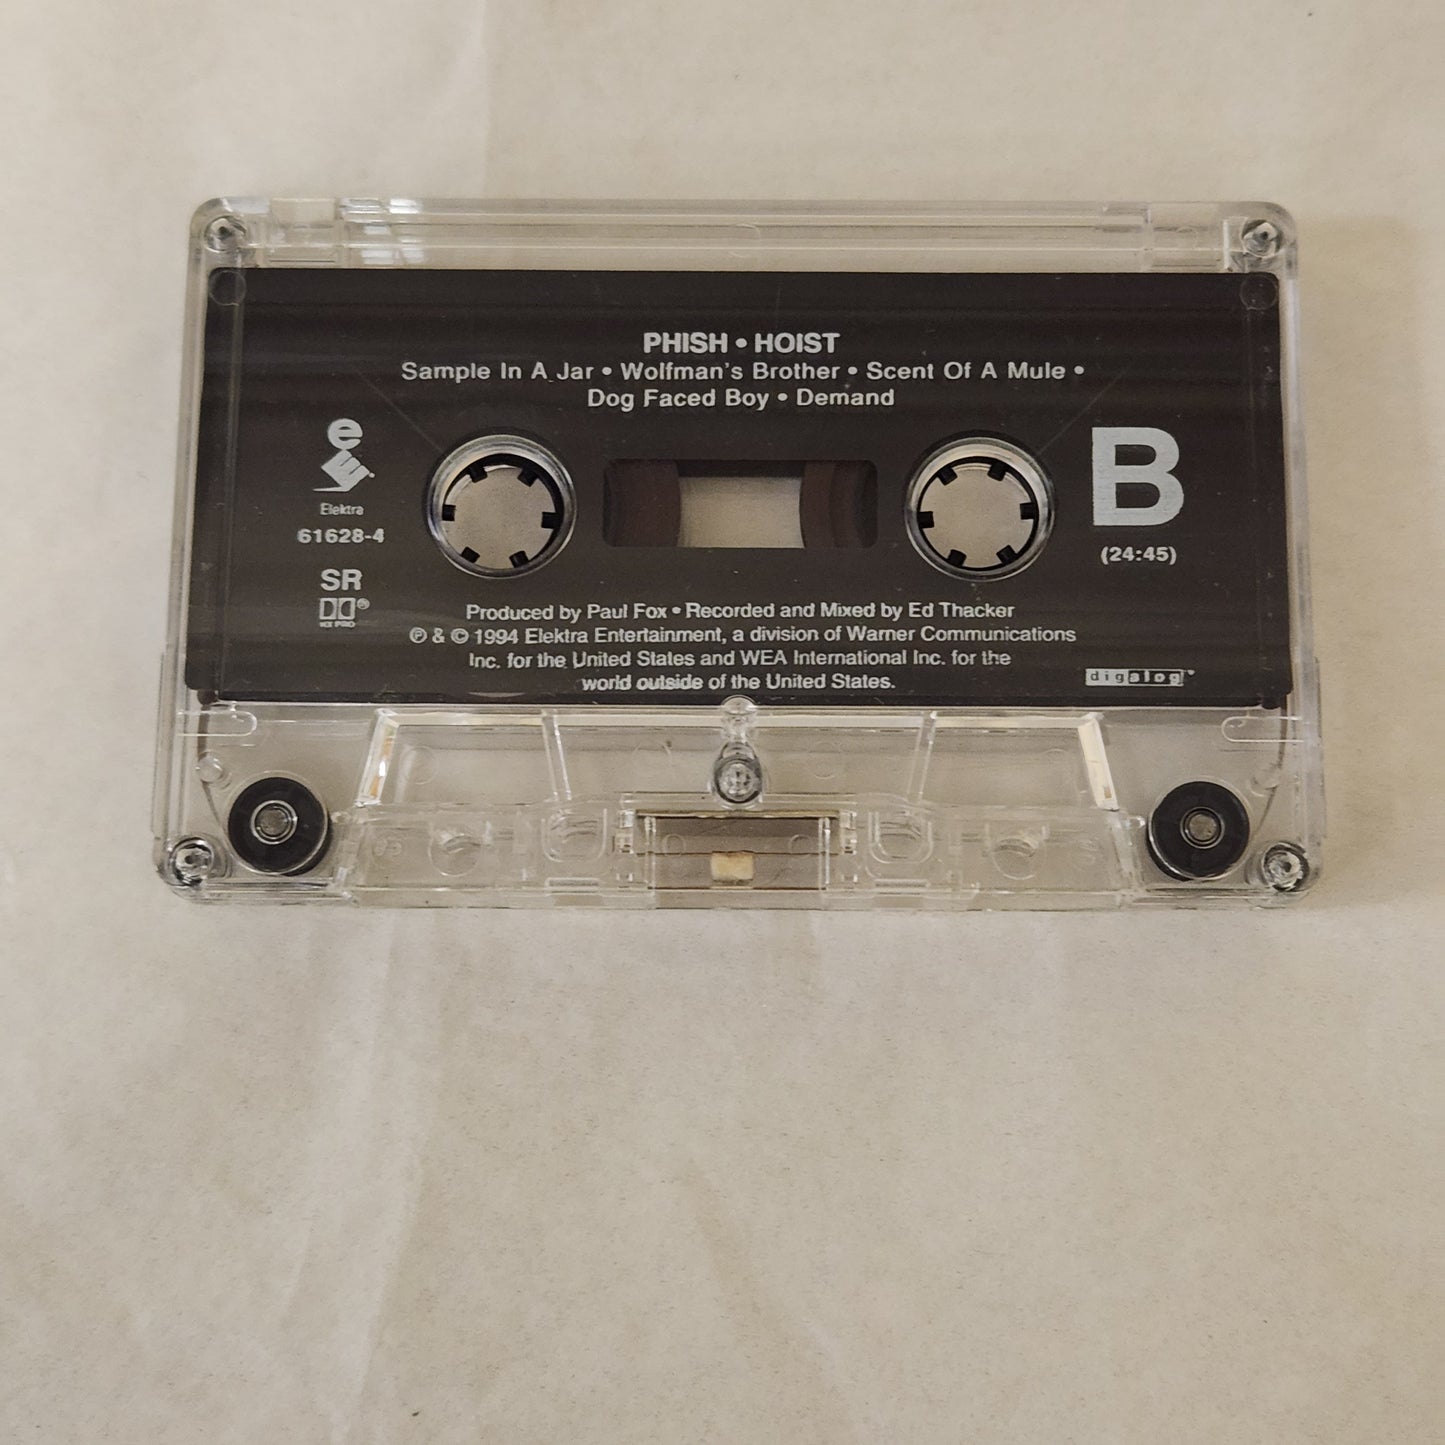 Phish "Hoist" 1994 Psychedelic Rock / Alternative Rock Cassette Tape